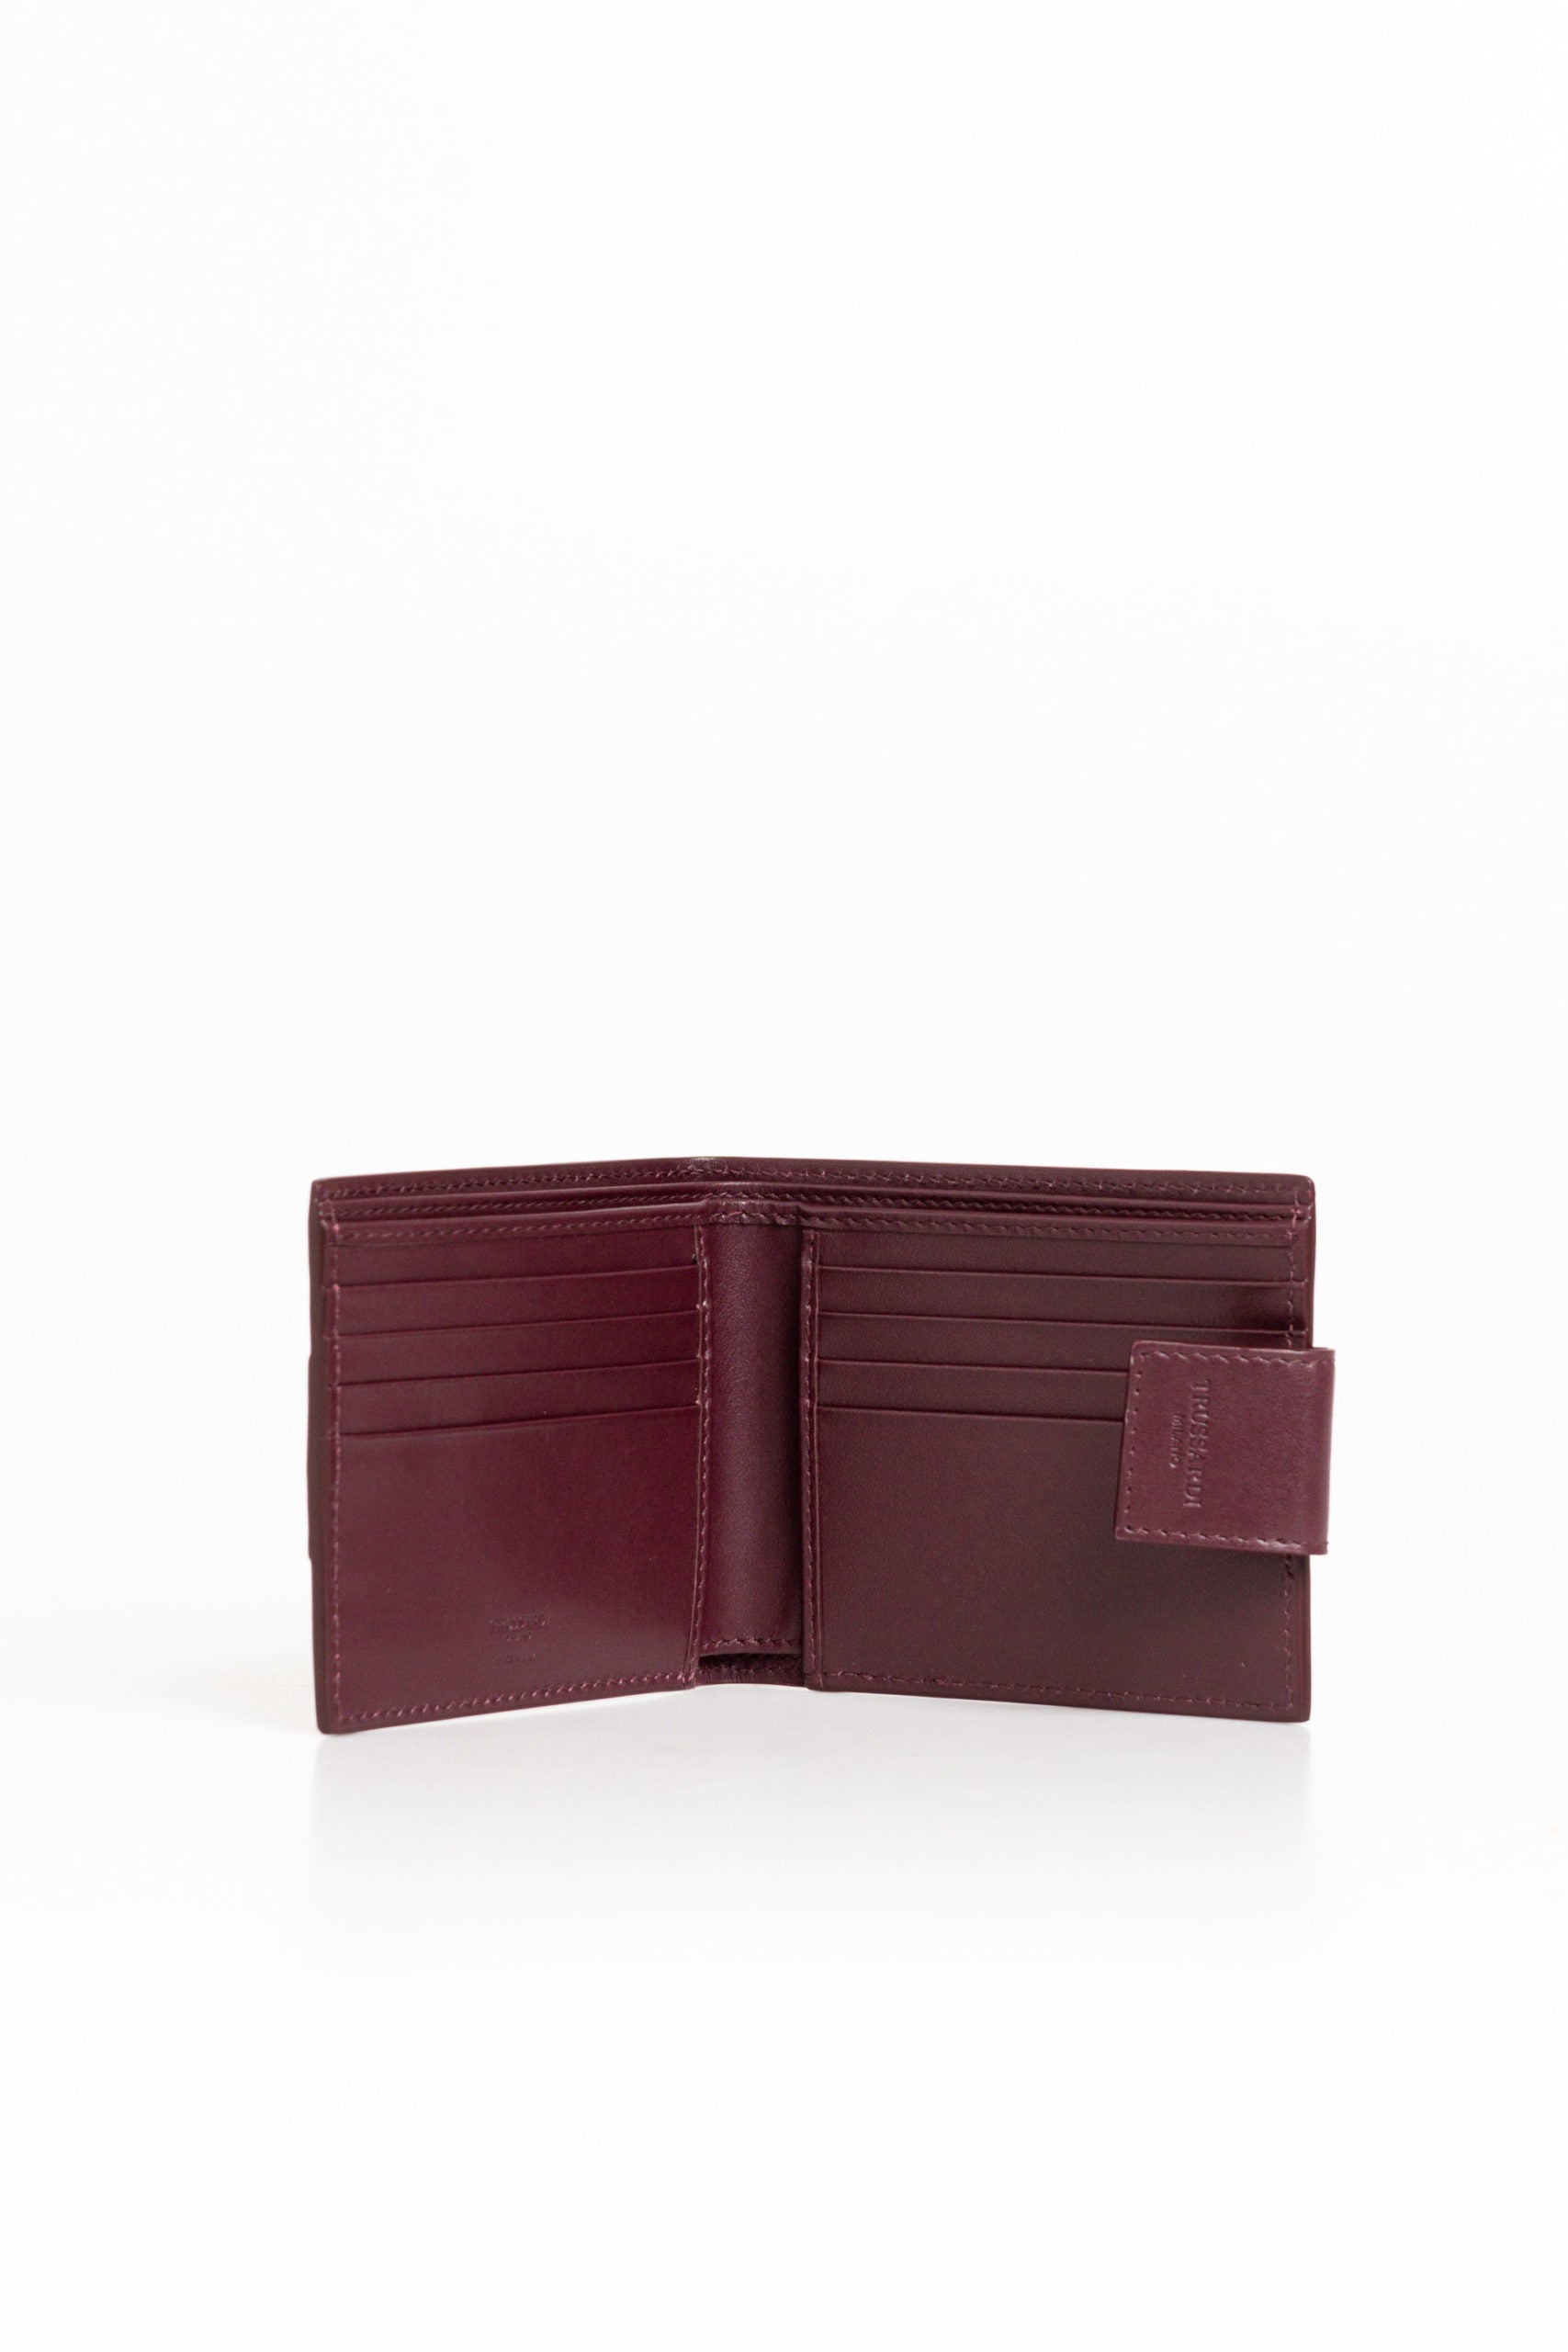 Trussardi Pocket Wallet In Soft Calfskin